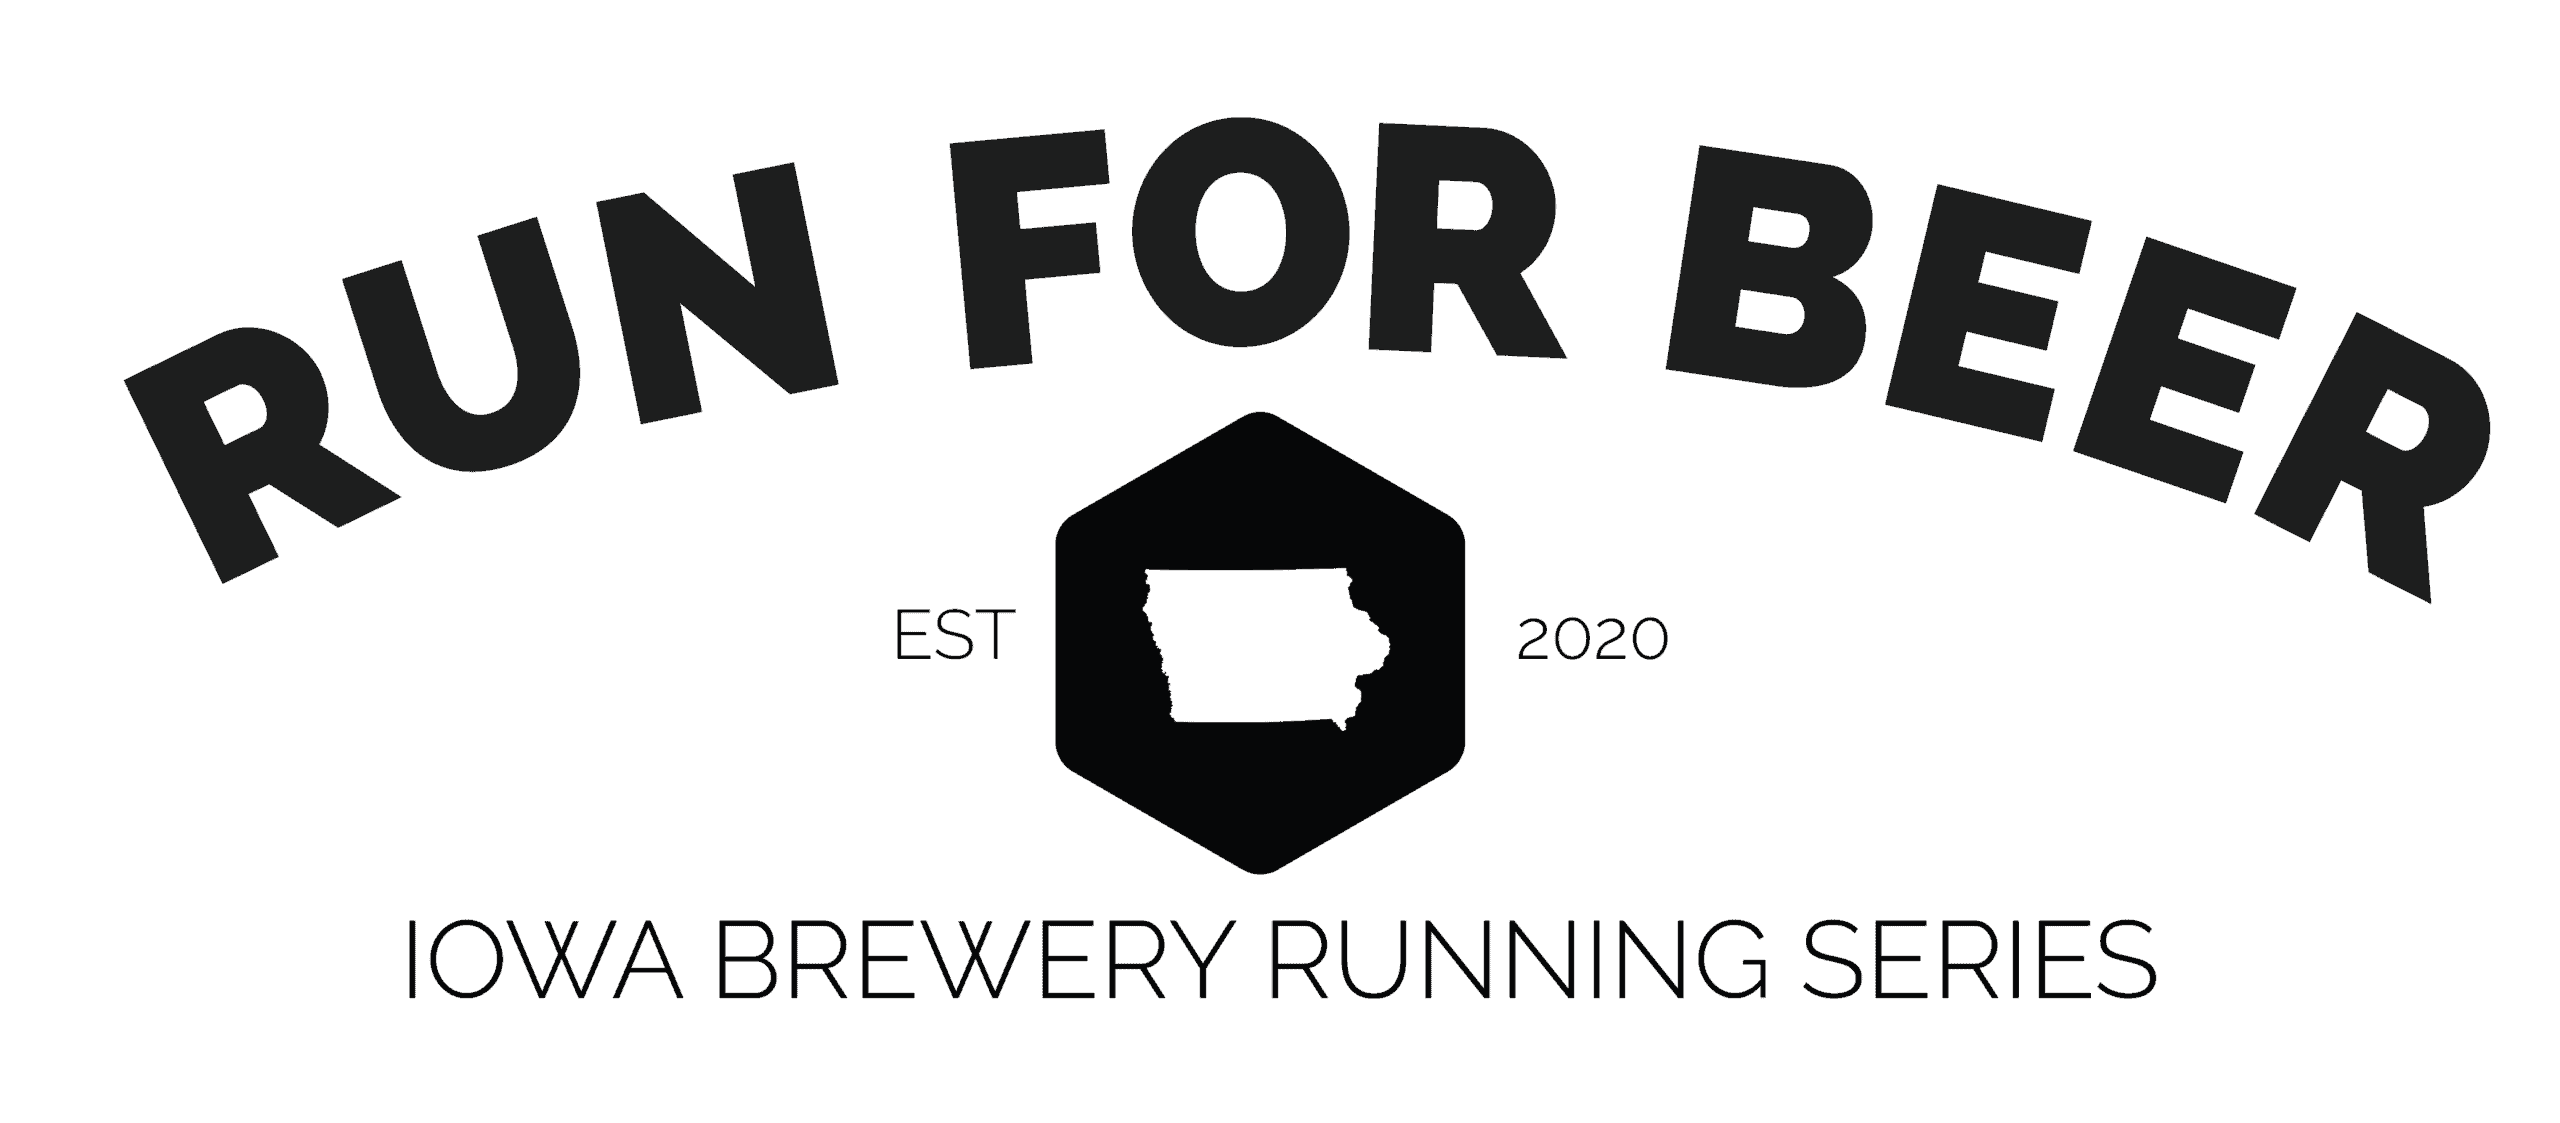 Texas Brewery Running Series